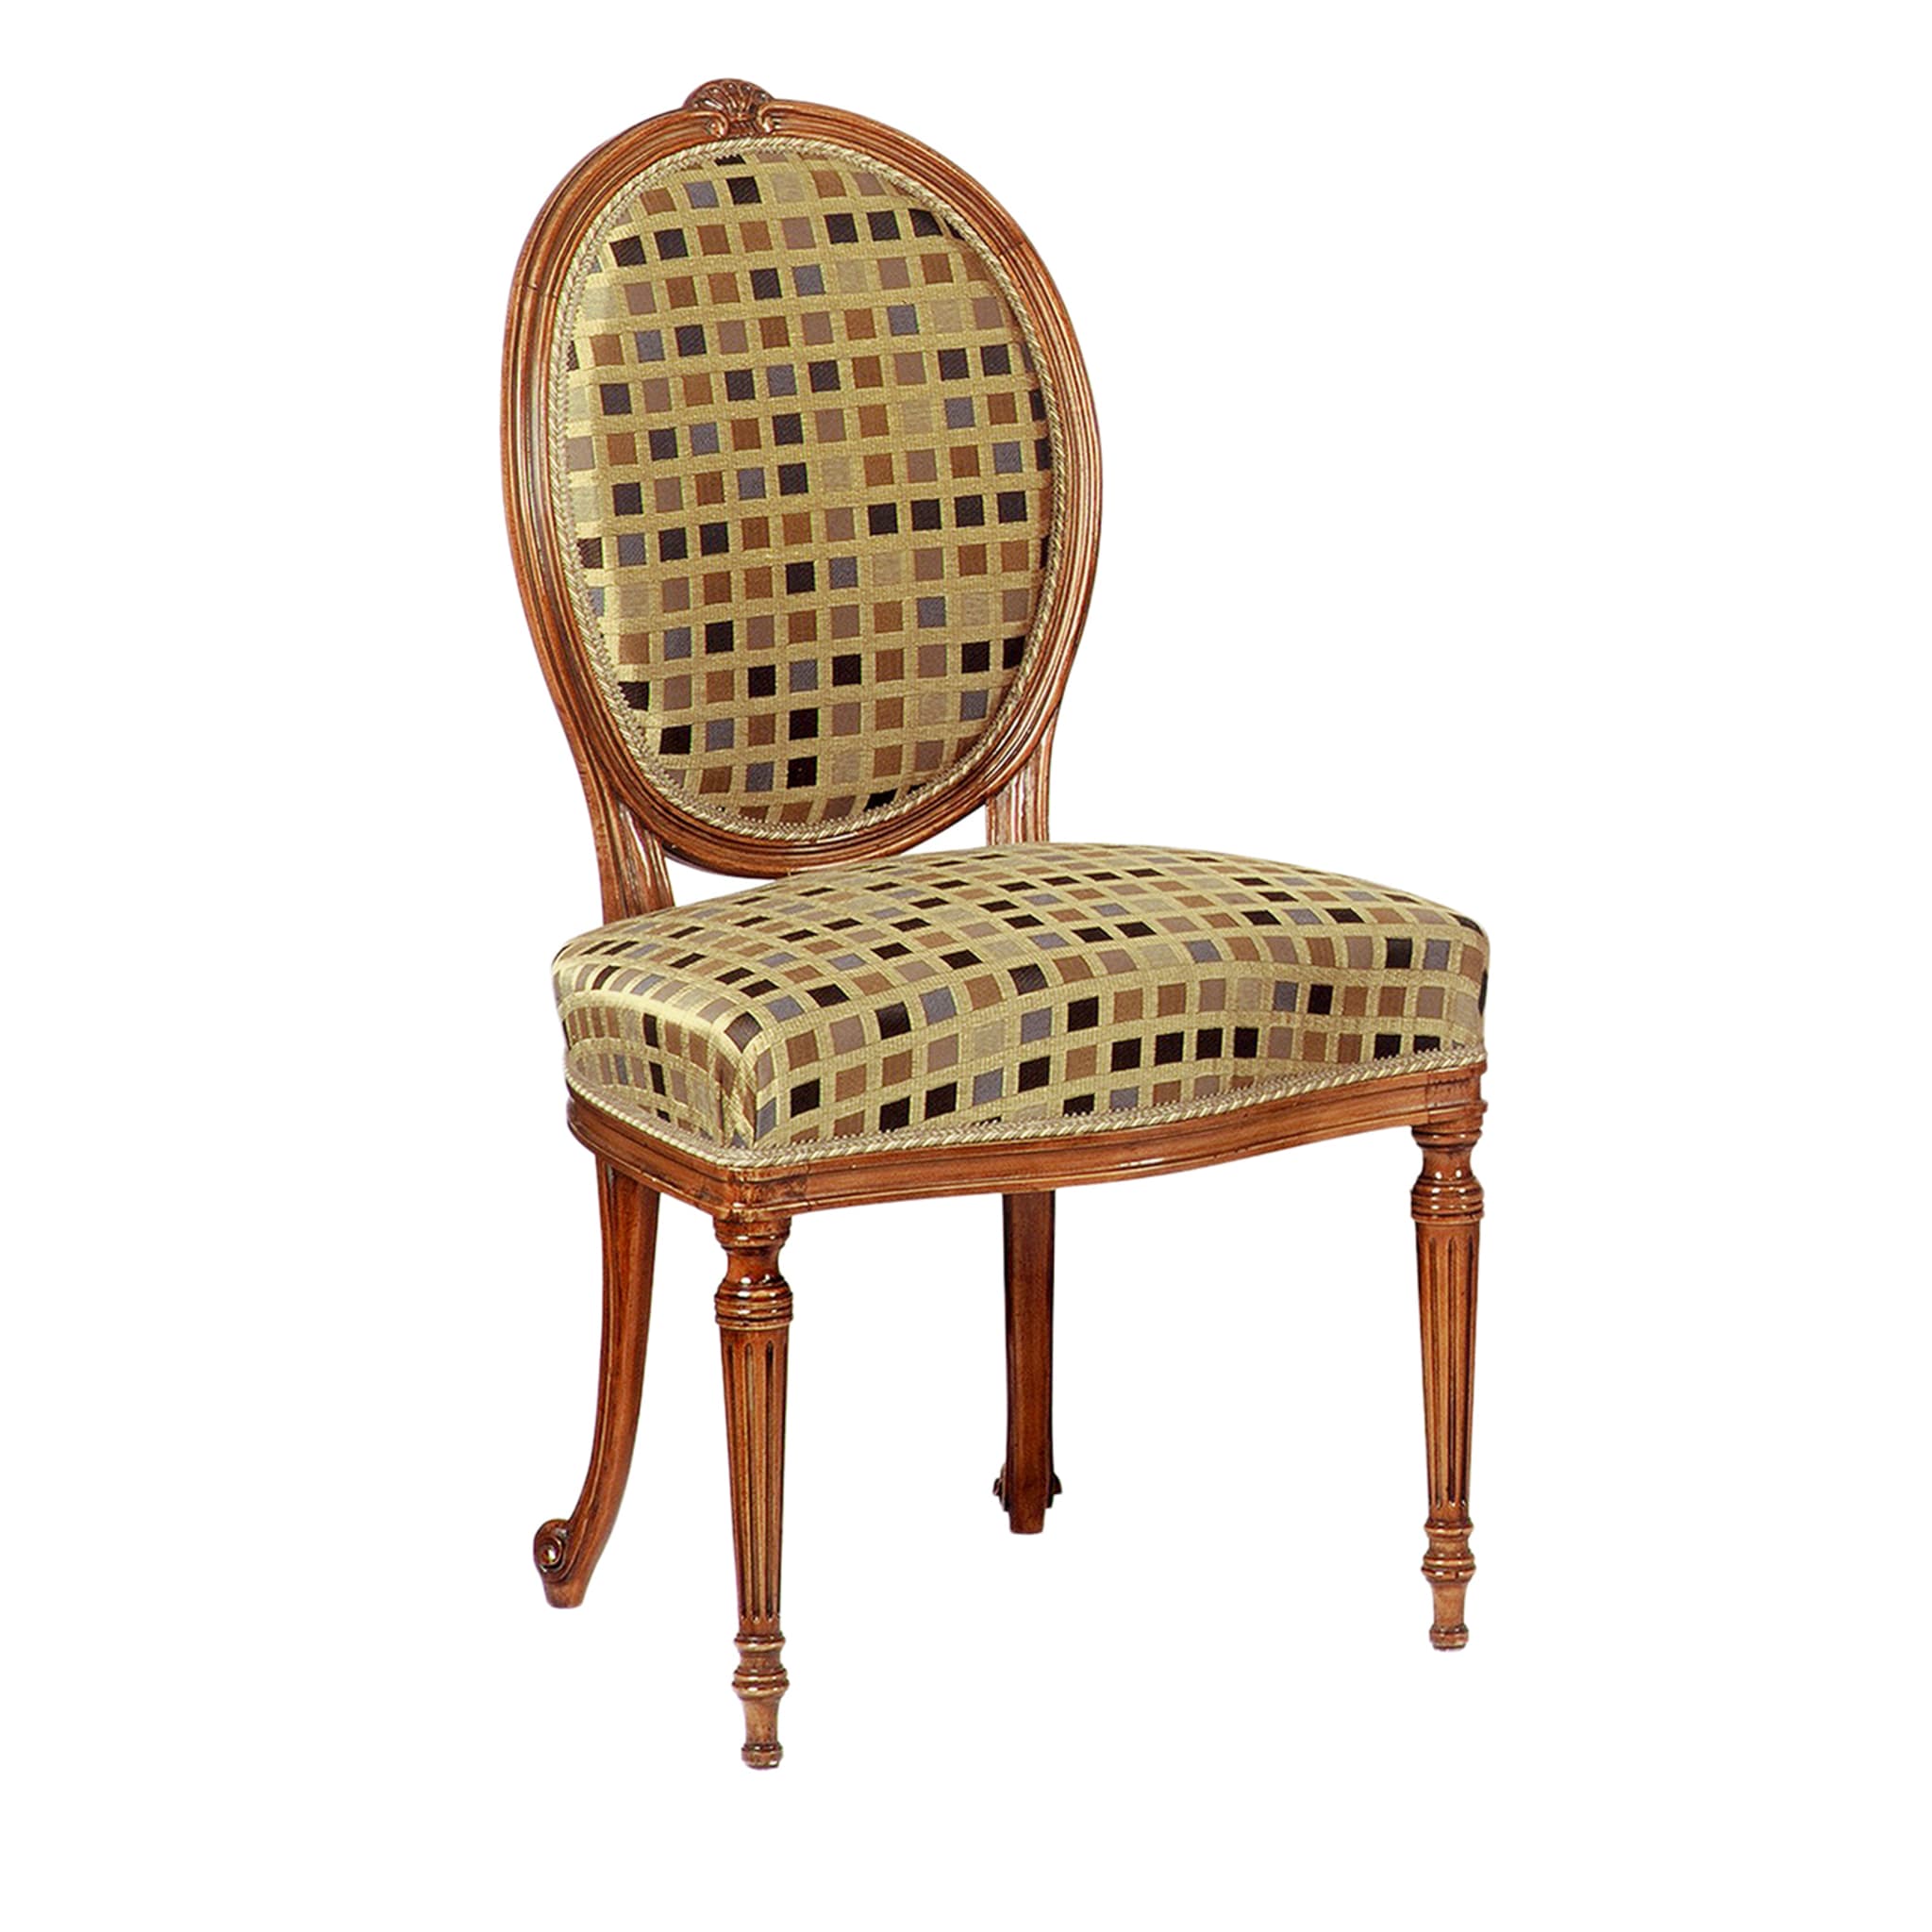 Chaise polychrome à motifs de style King George III - Vue principale